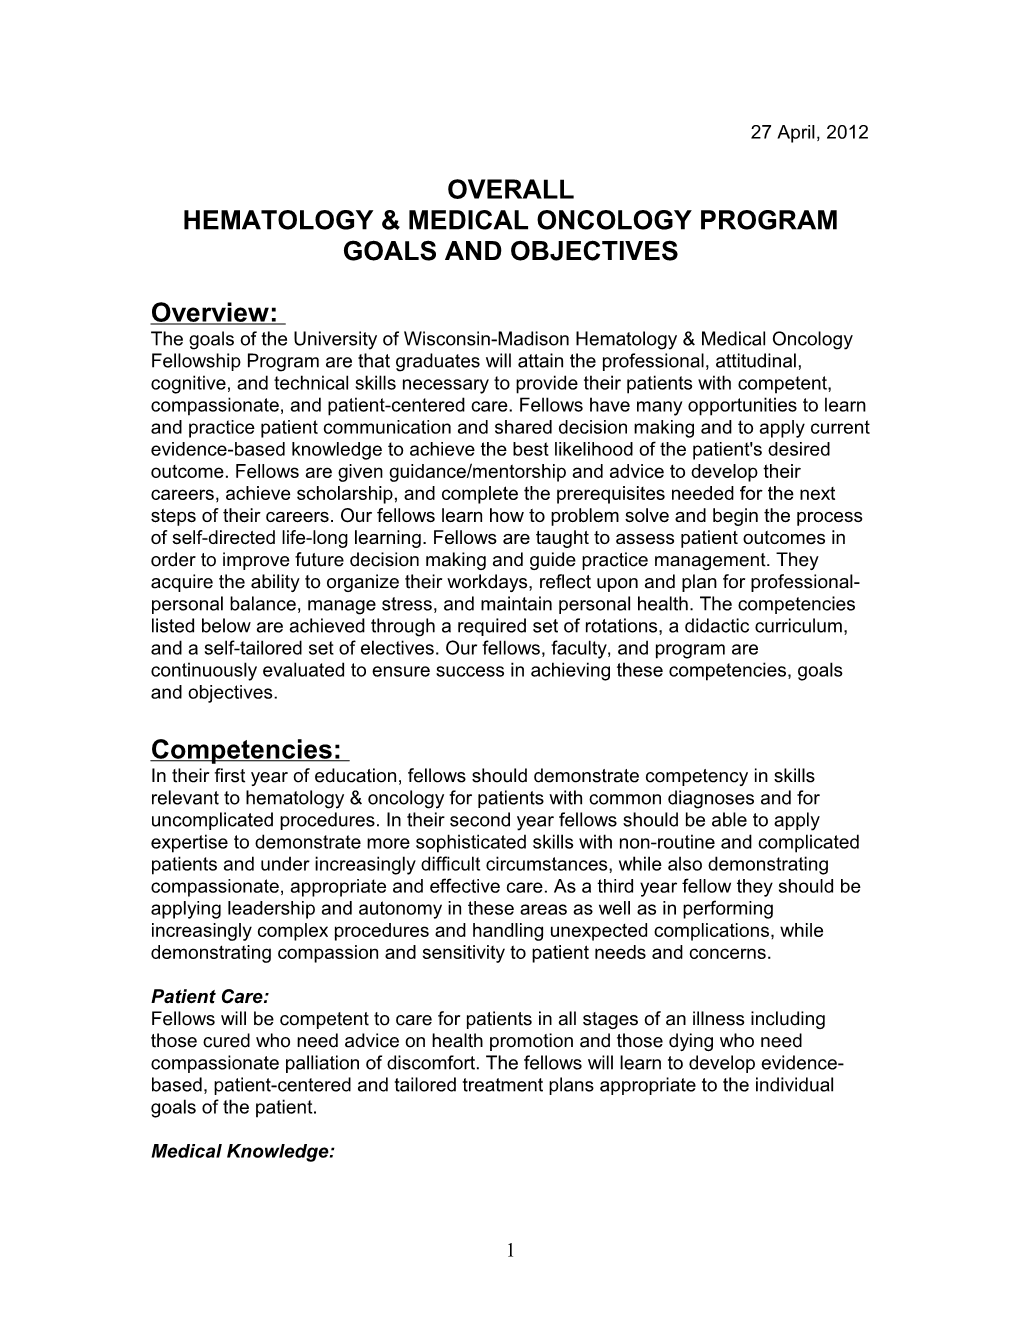 Hematology & Medical Oncology Program Goals and Objectives